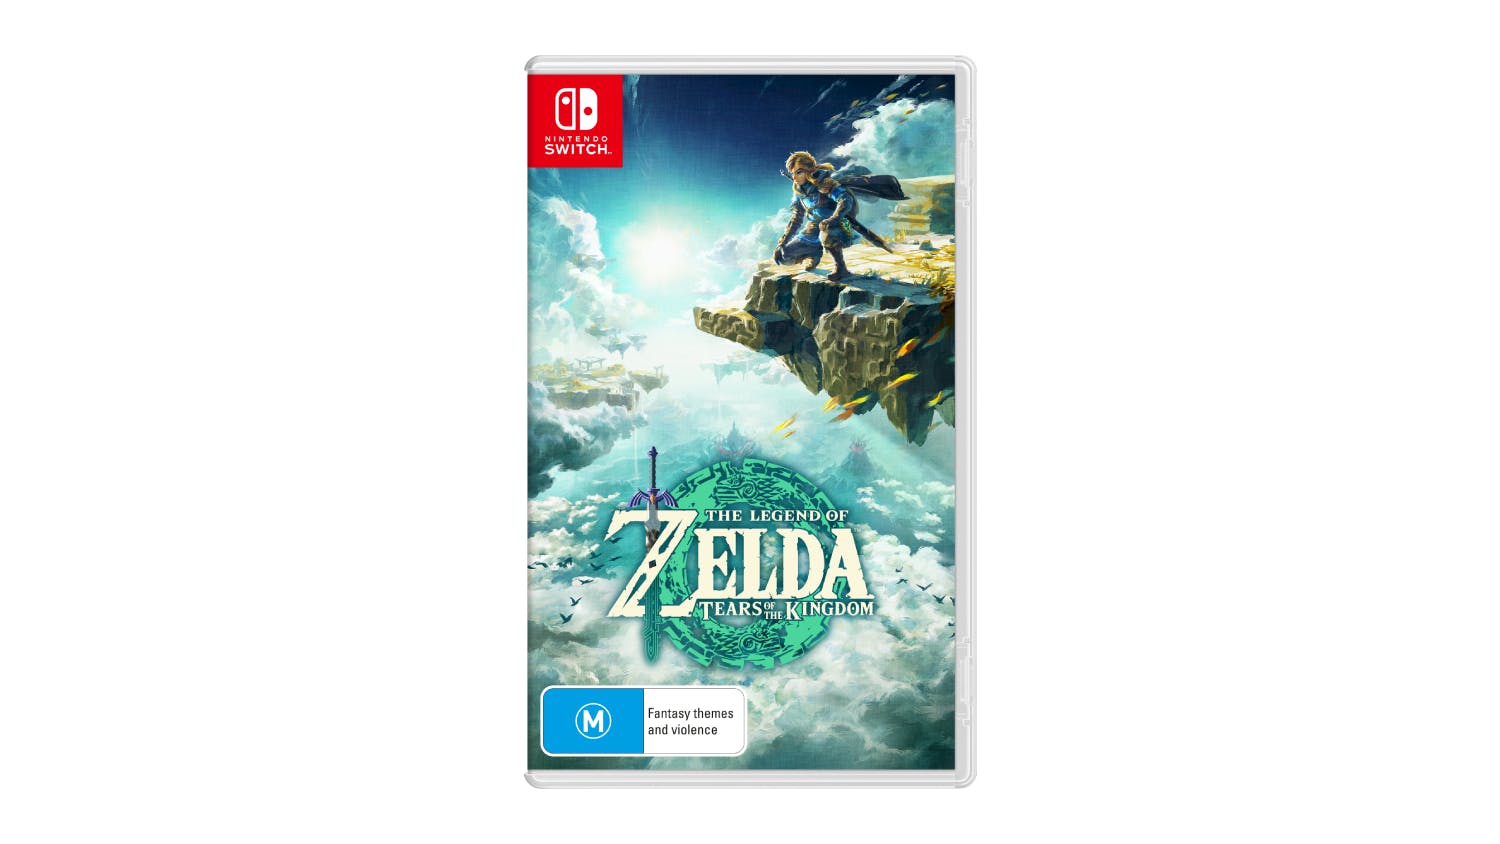 Nintendo Switch - The Legend of Zelda: Tears of the Kingdom (M